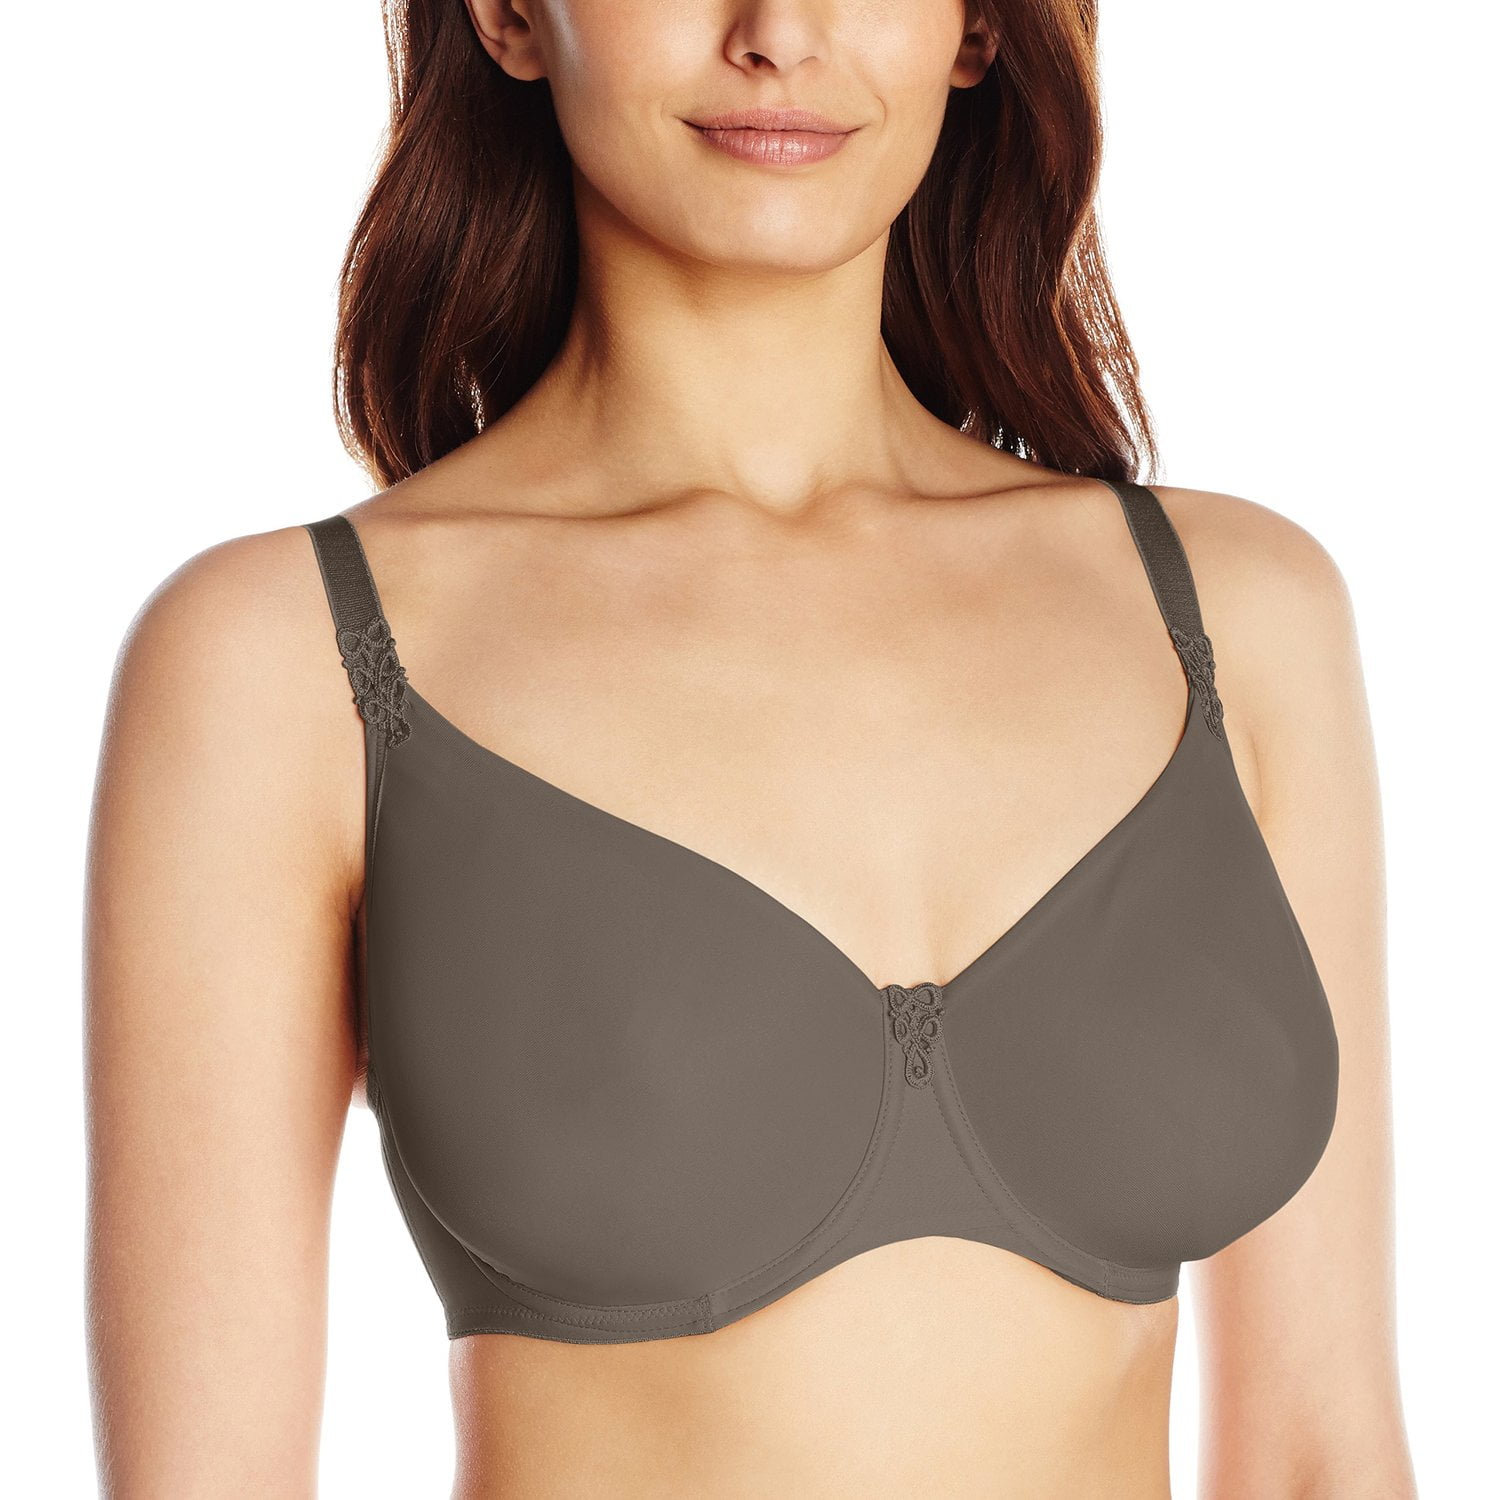 FANTASIE Size 30I unlined underwire bra Tan - $23 - From Elizabeth